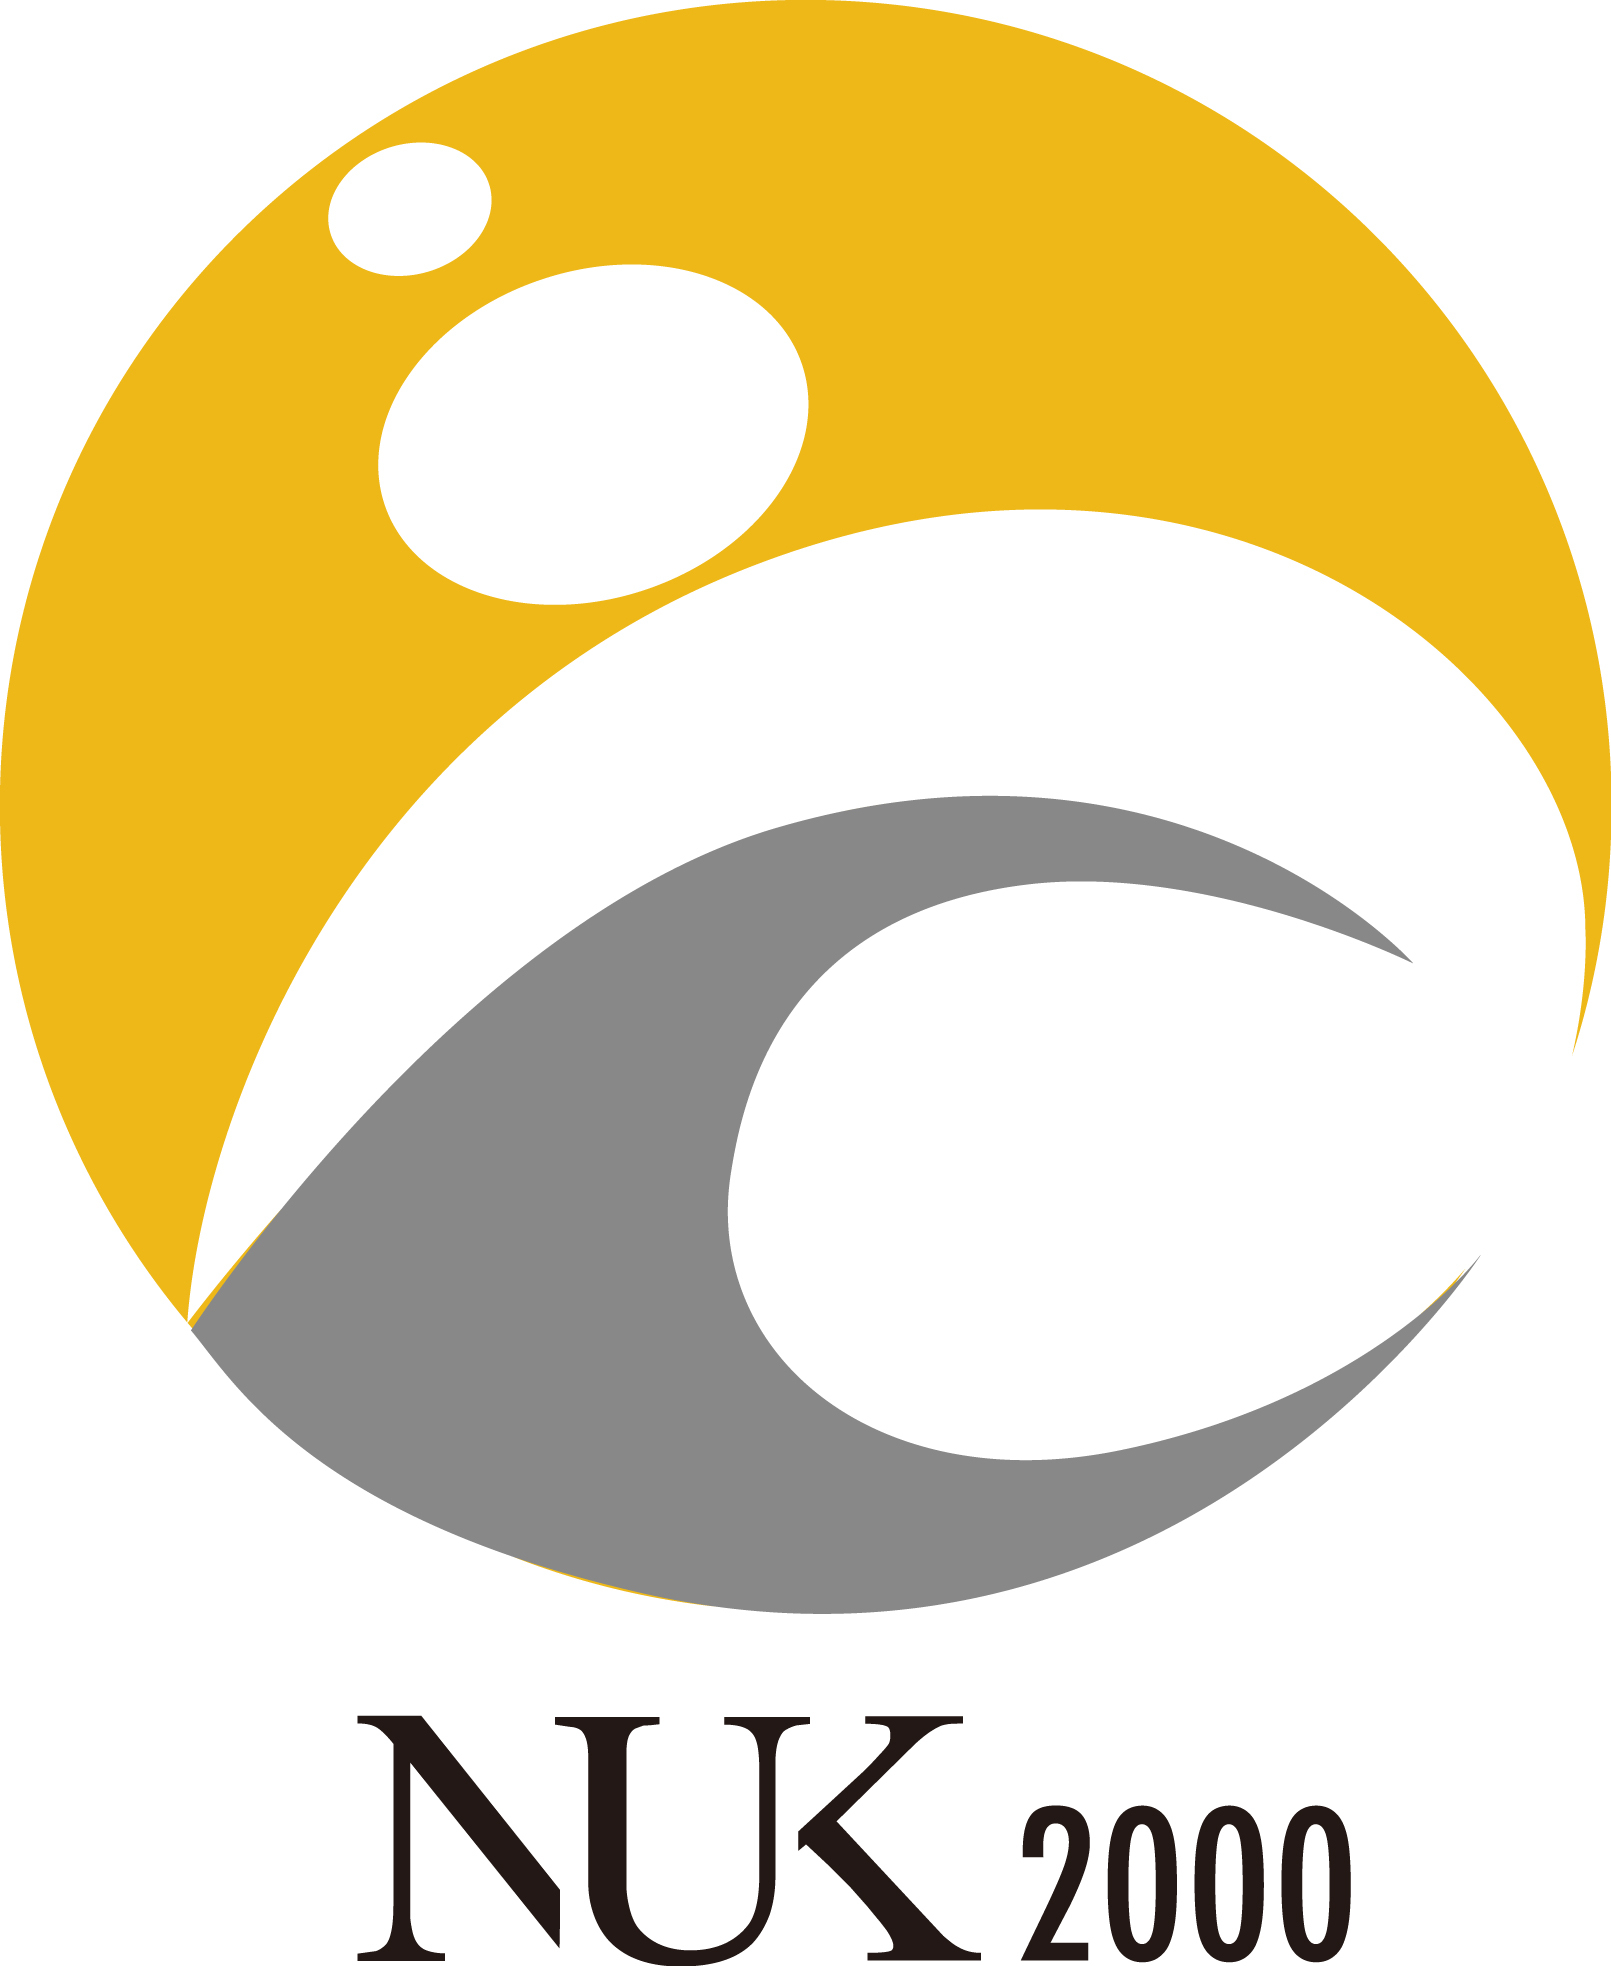 圓形logo_2000